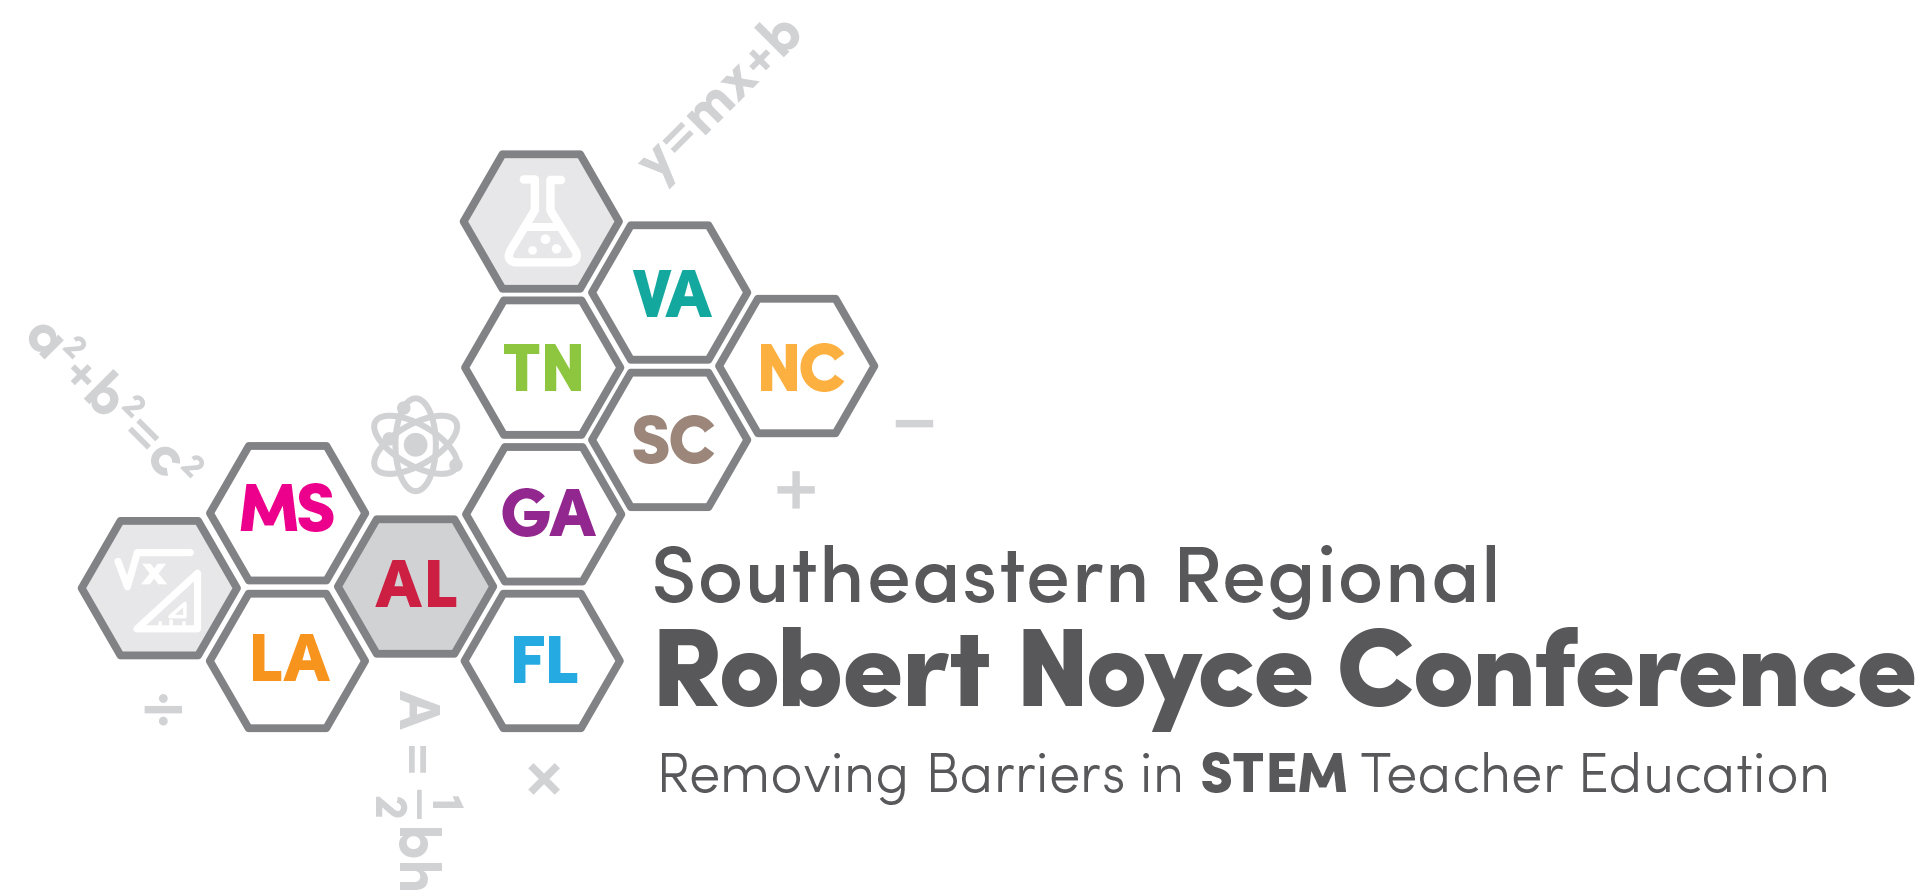 Southeastern Regional Robert Noyce Conference